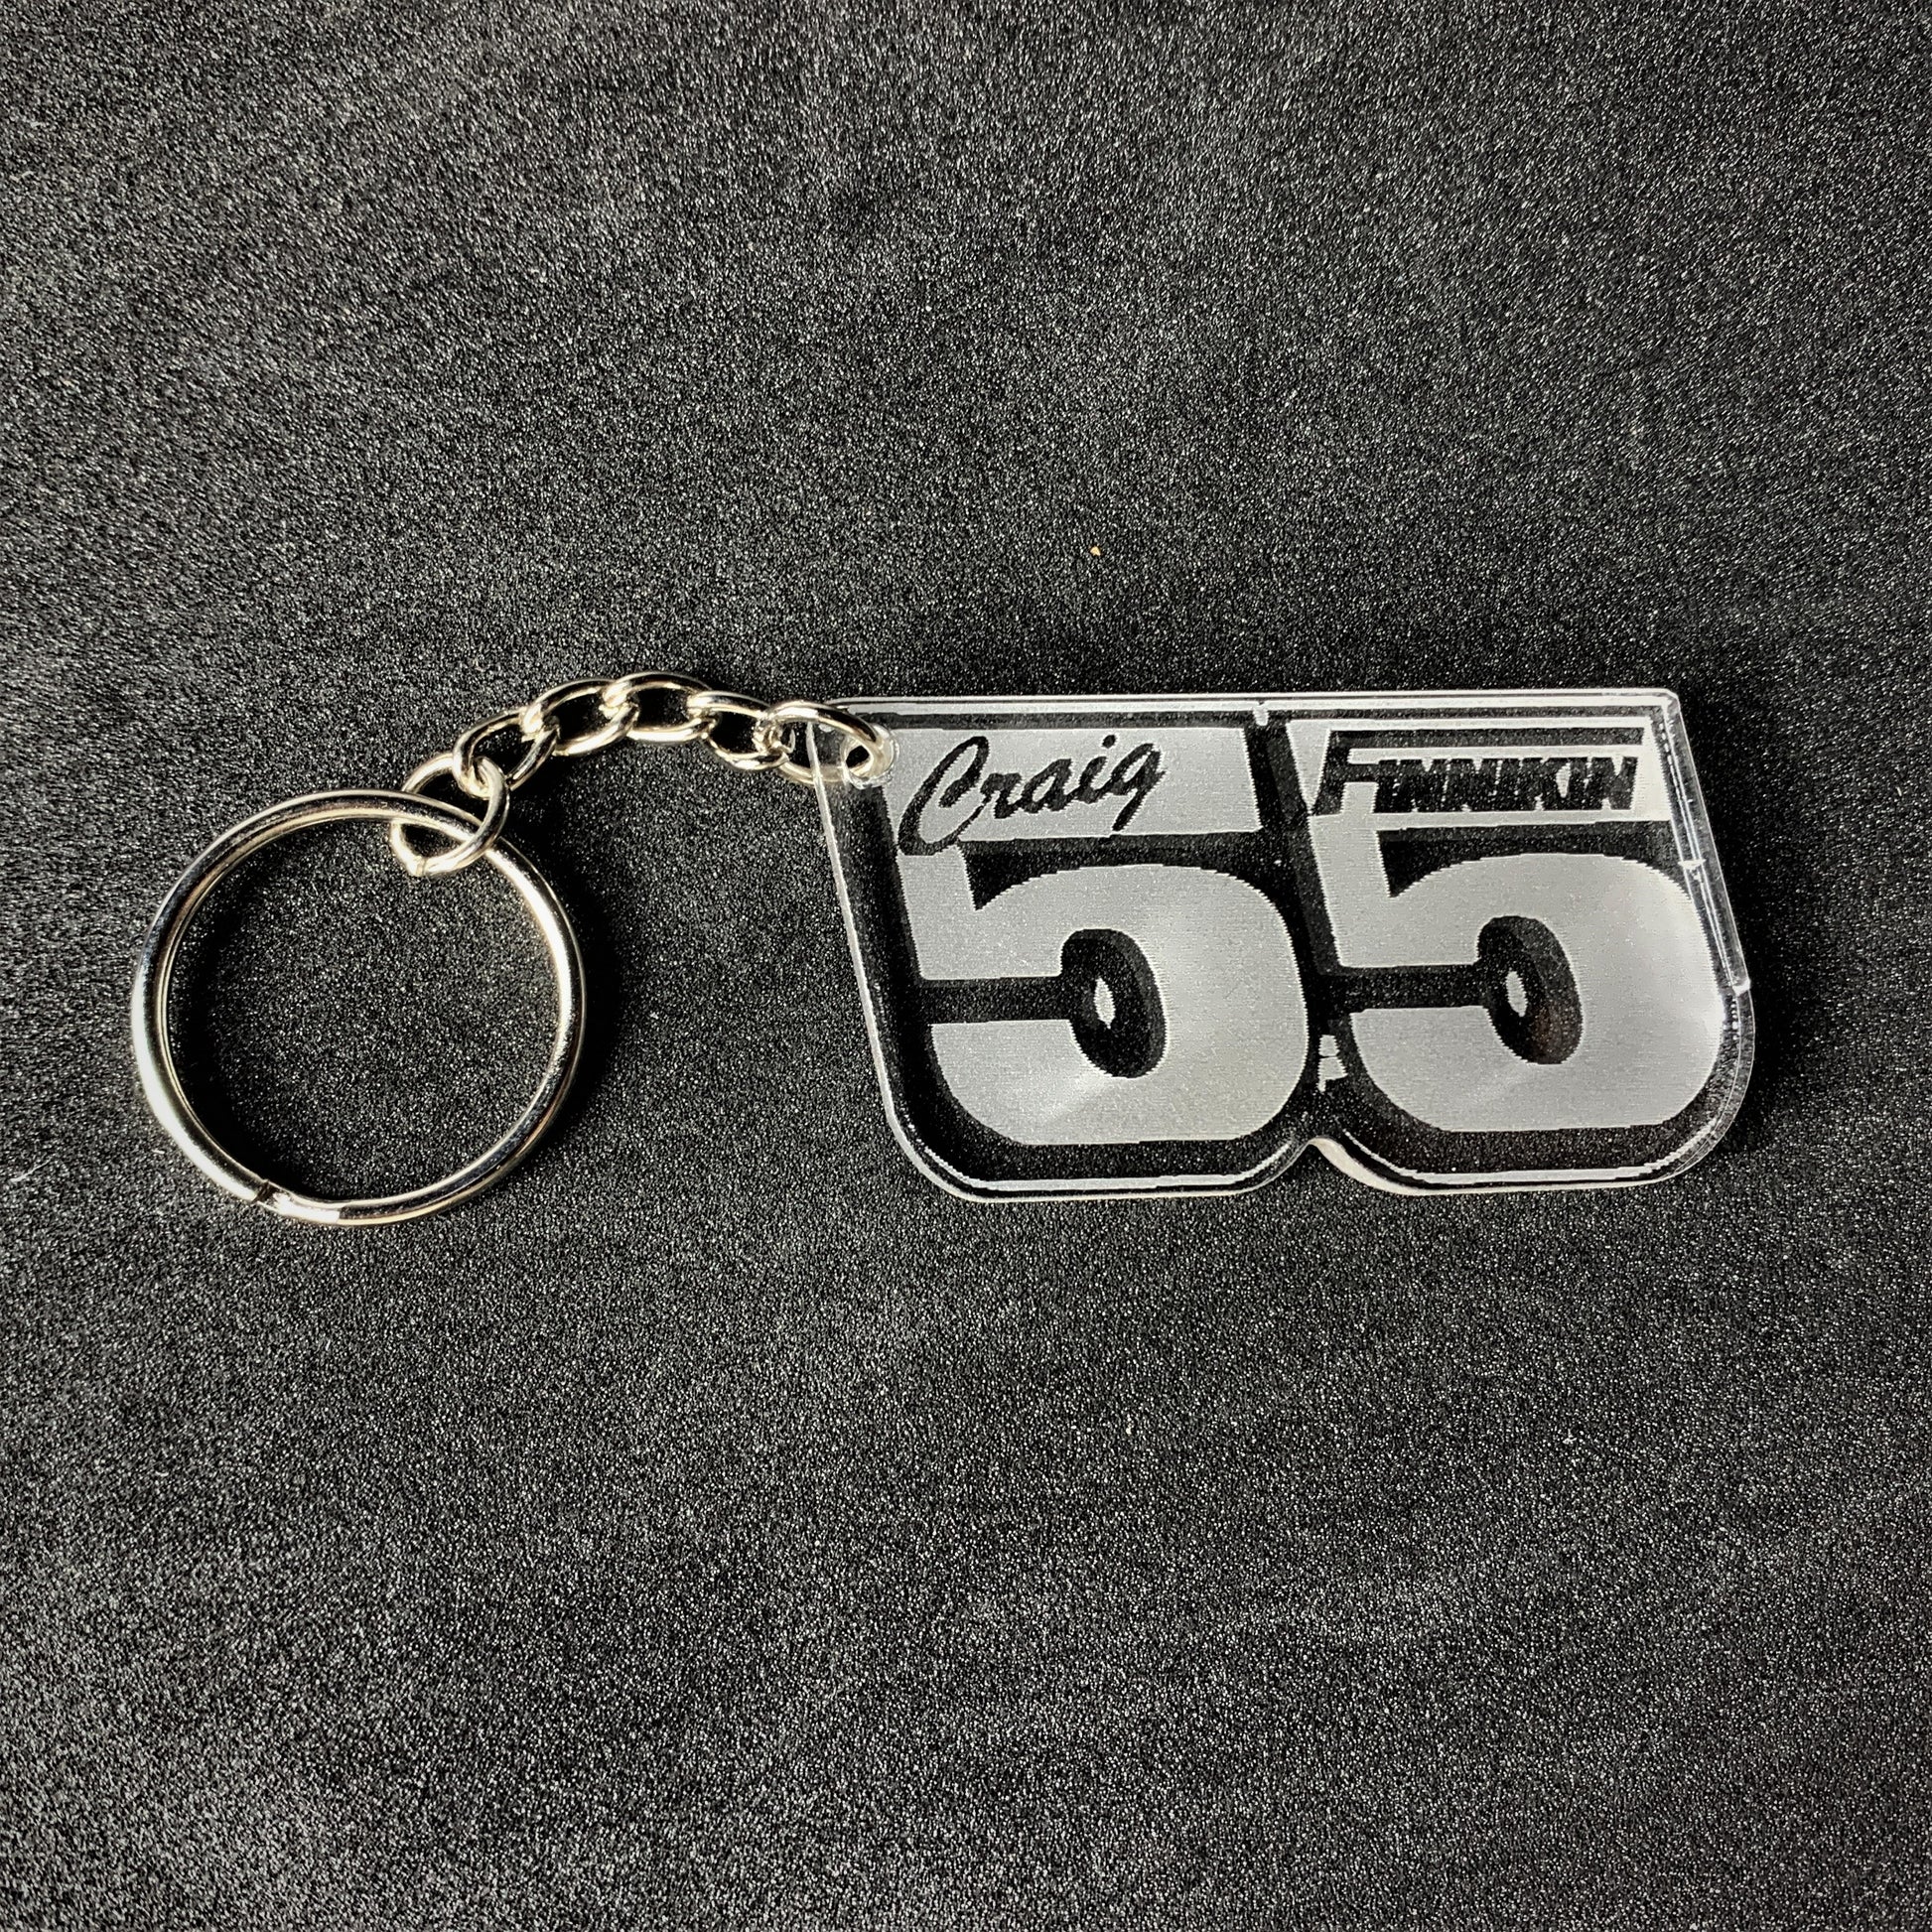 #55 Craig Finnikin Key Ring - Key Ring - Stock Car & Banger Toy Tracks